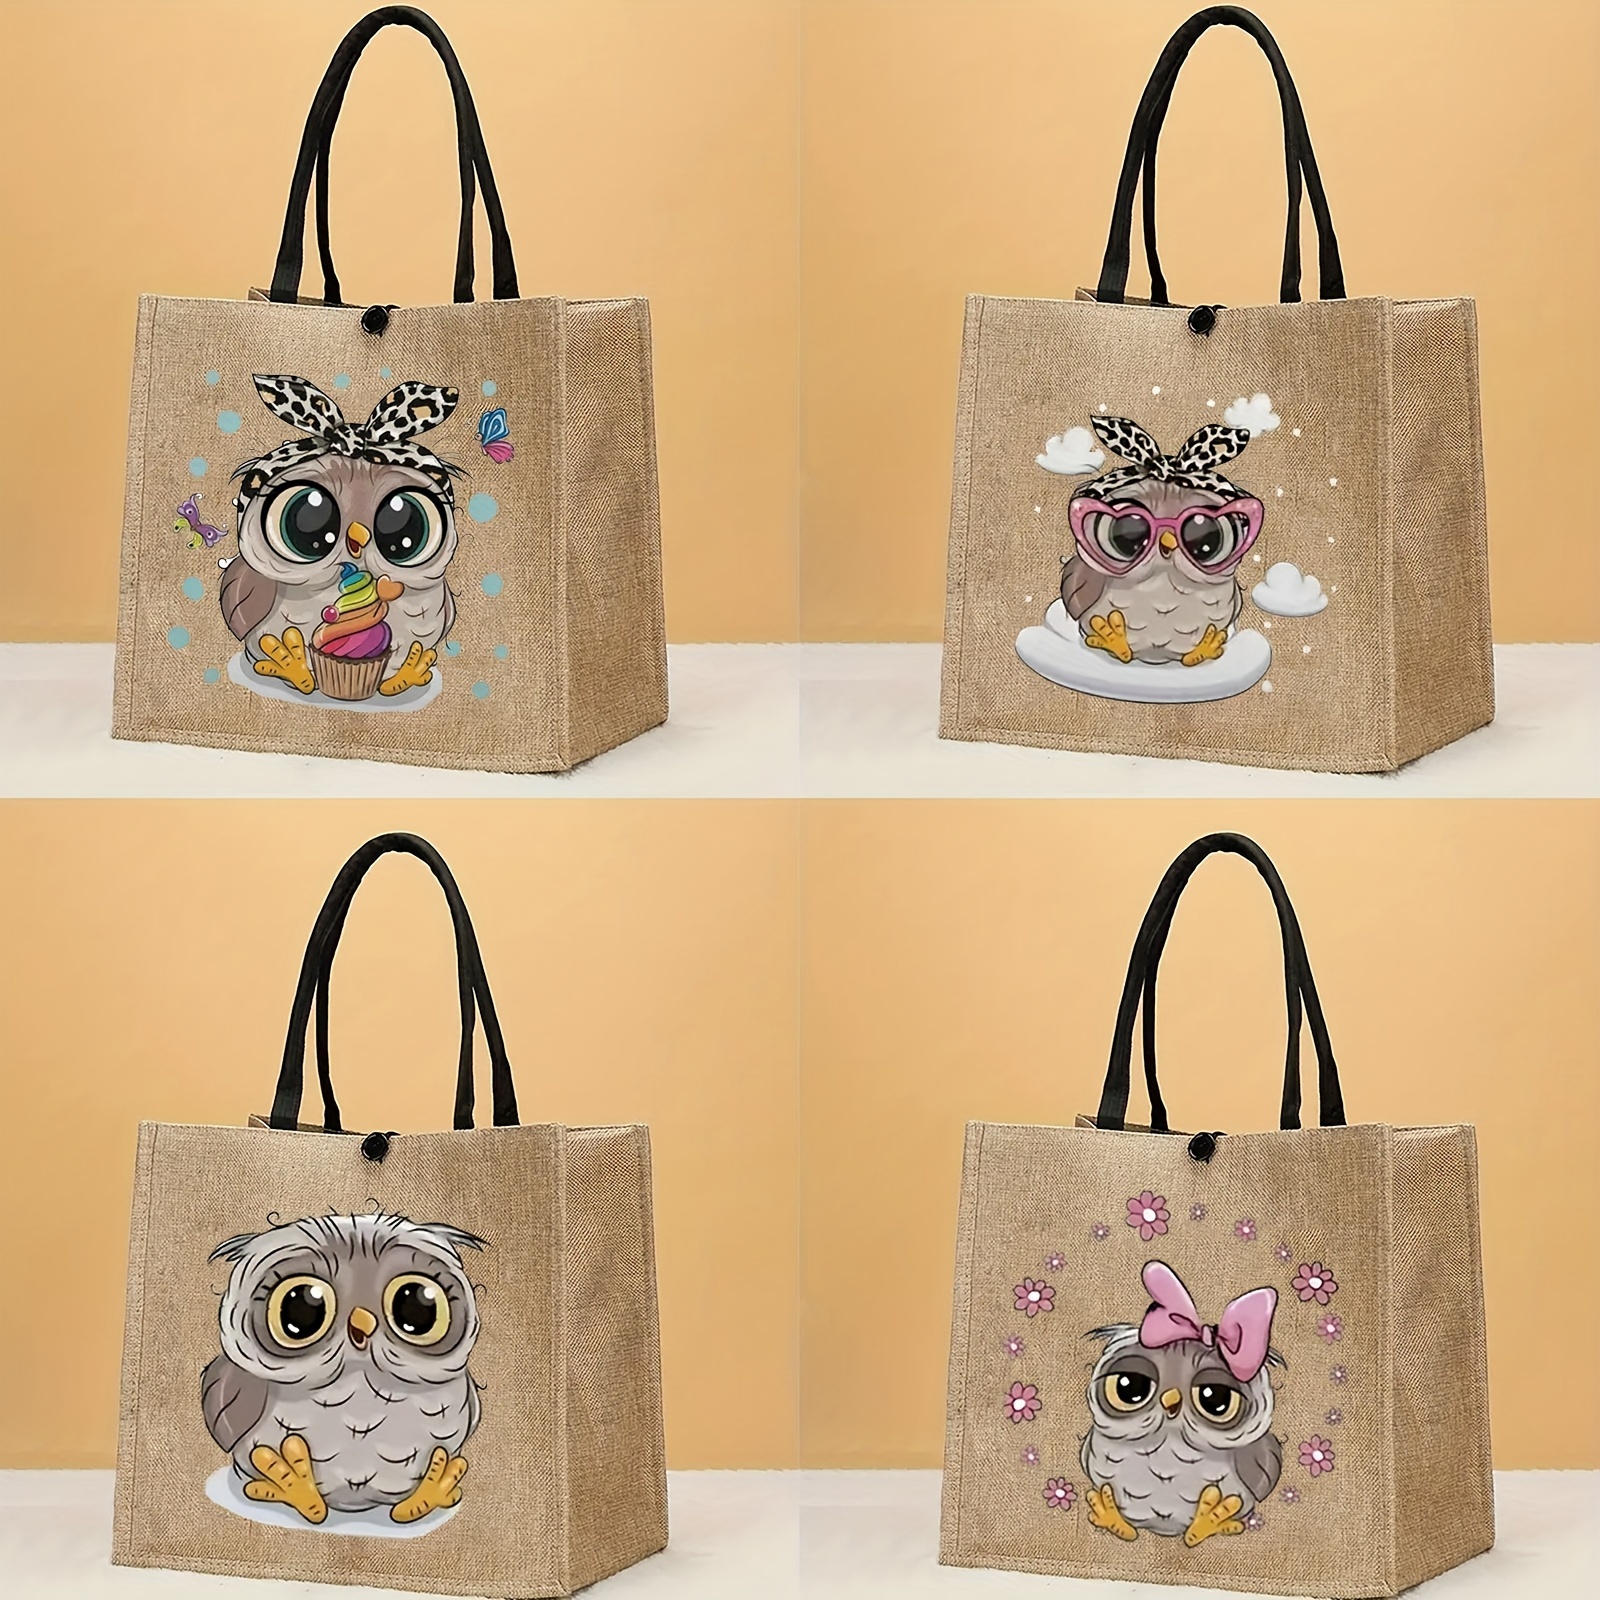 

Cute Cartoon Owl Print Tote Bag, Large Capacity Shoulder Bag, Women's Casual Handbag For Shopping Travel